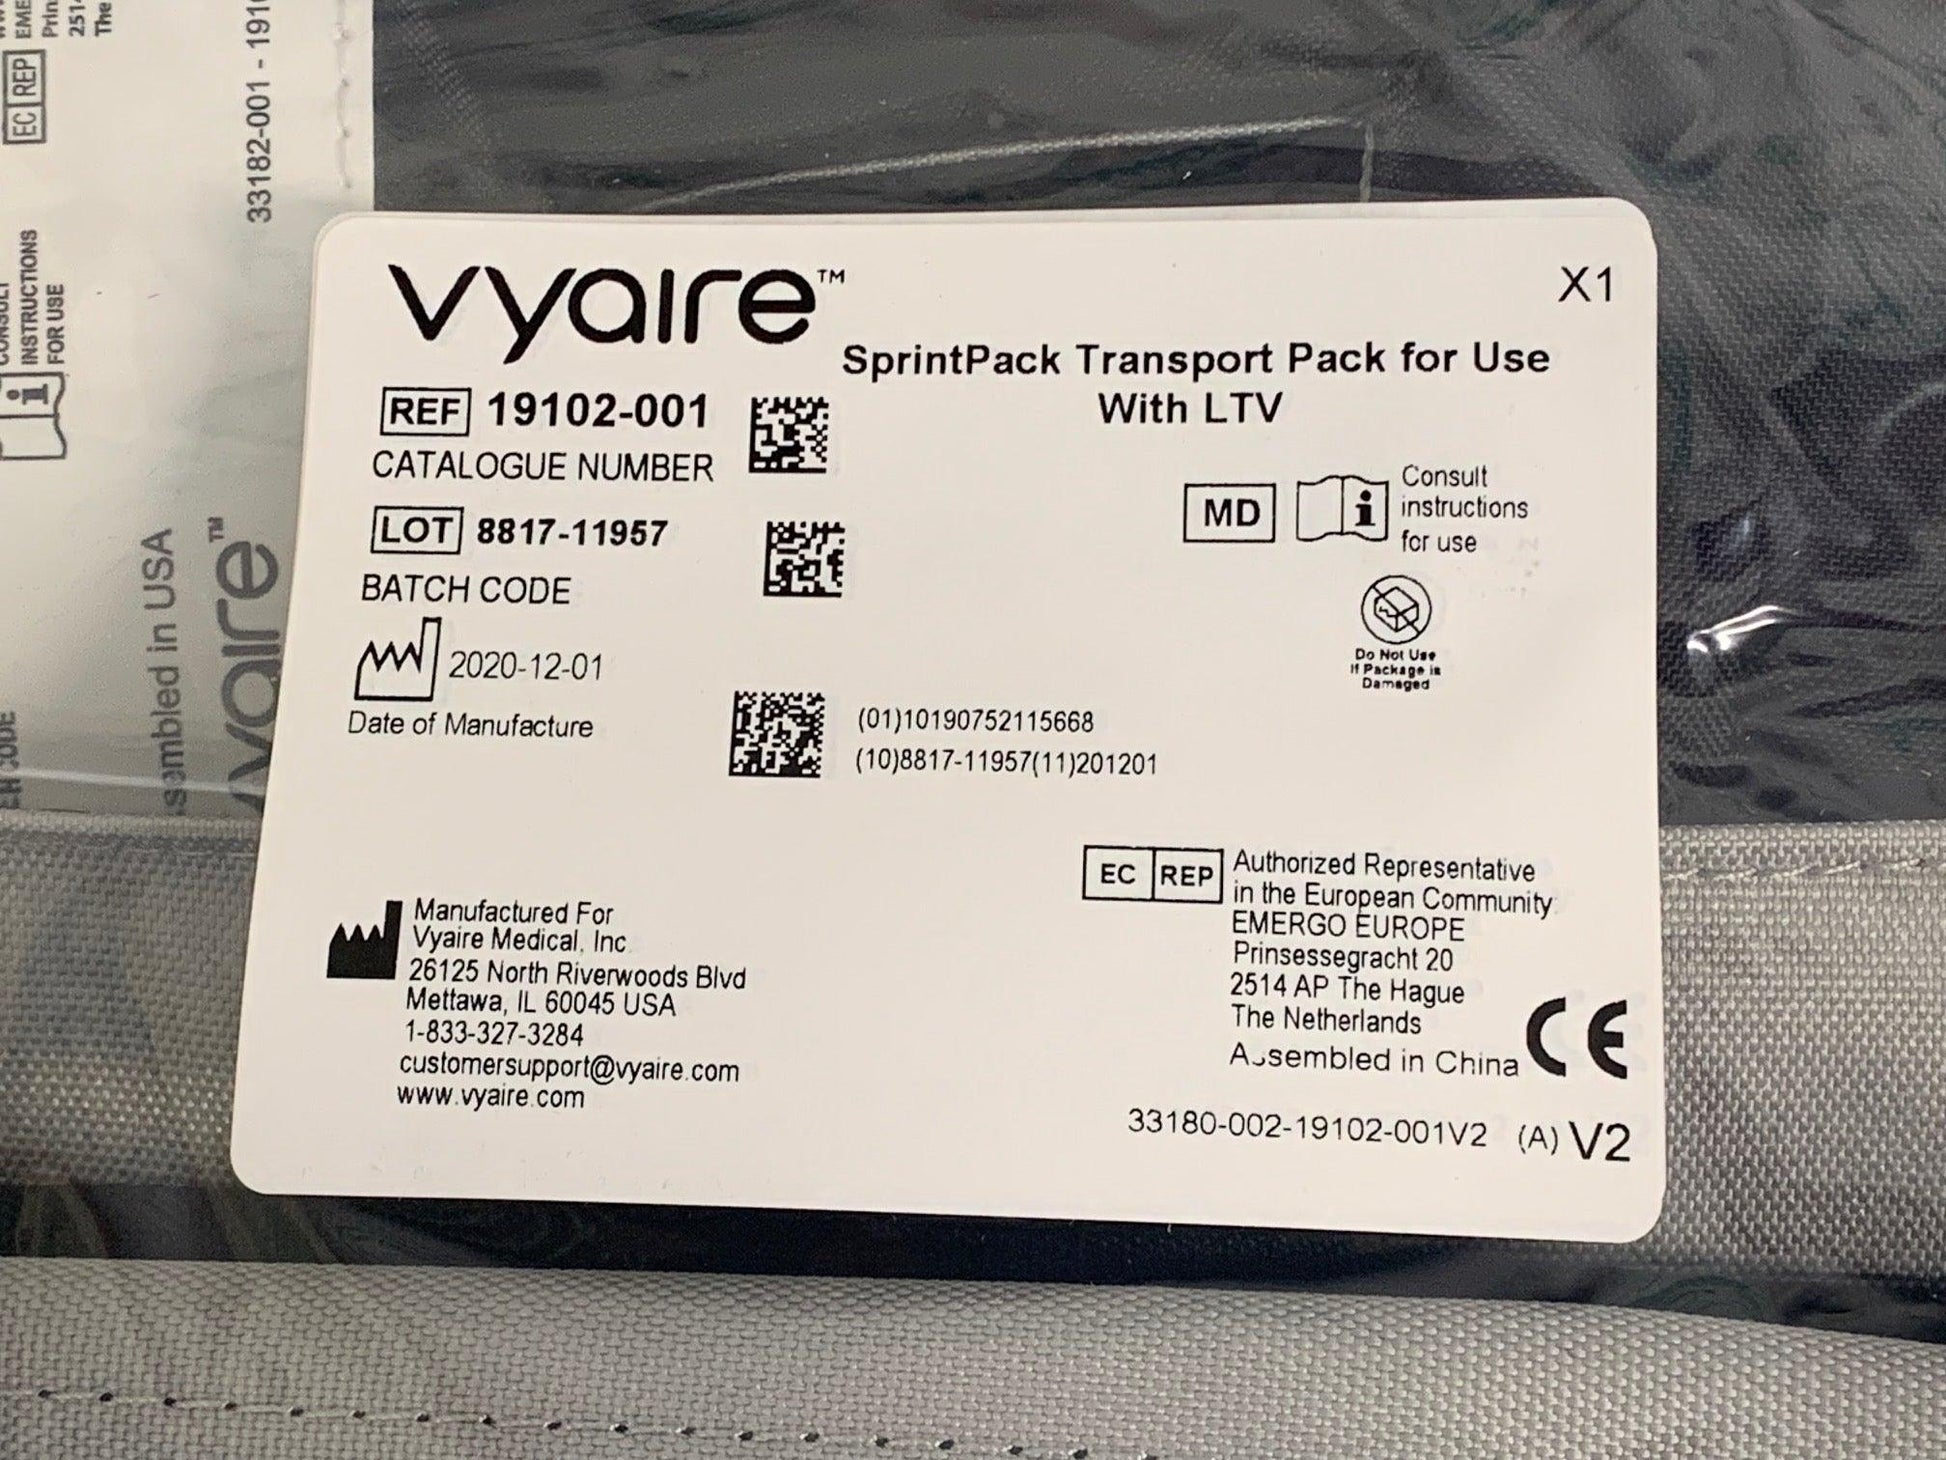 NEW Vyaire CareFusion Transport Backpack for LTV Medical Ventilator and SprintPack Power System 19102-001 - MBR Medicals